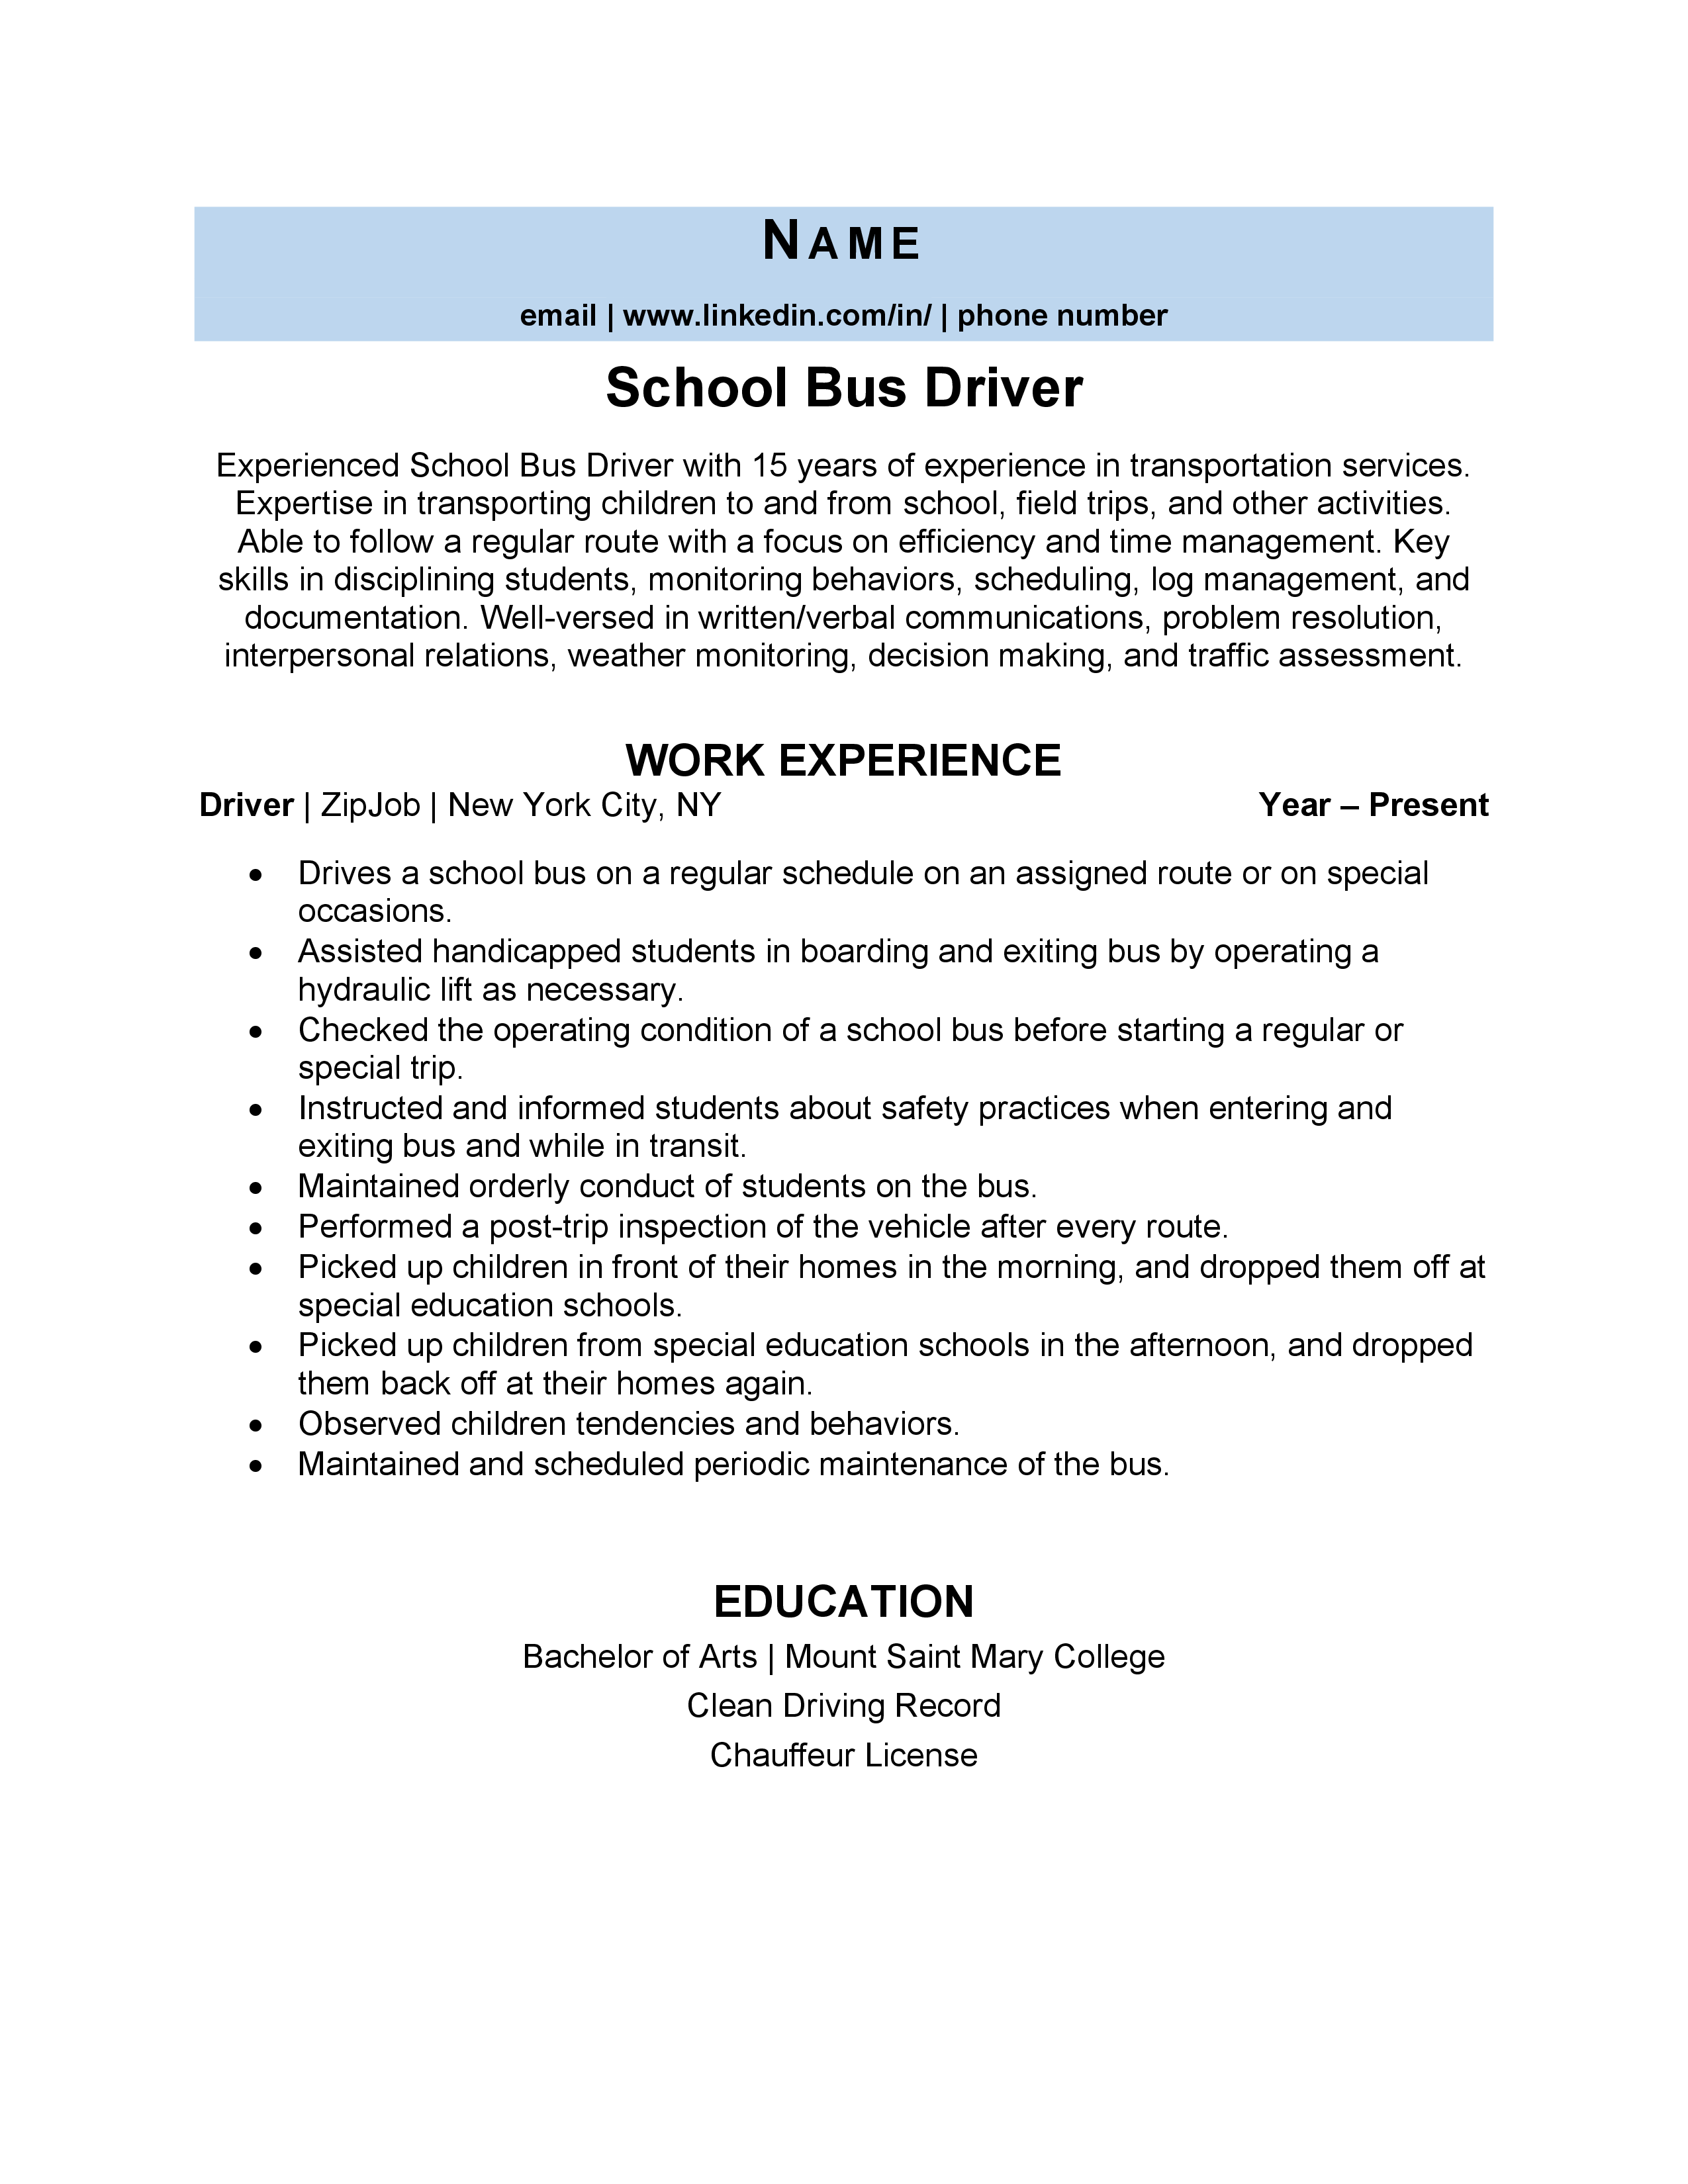 school bus resume cover letter